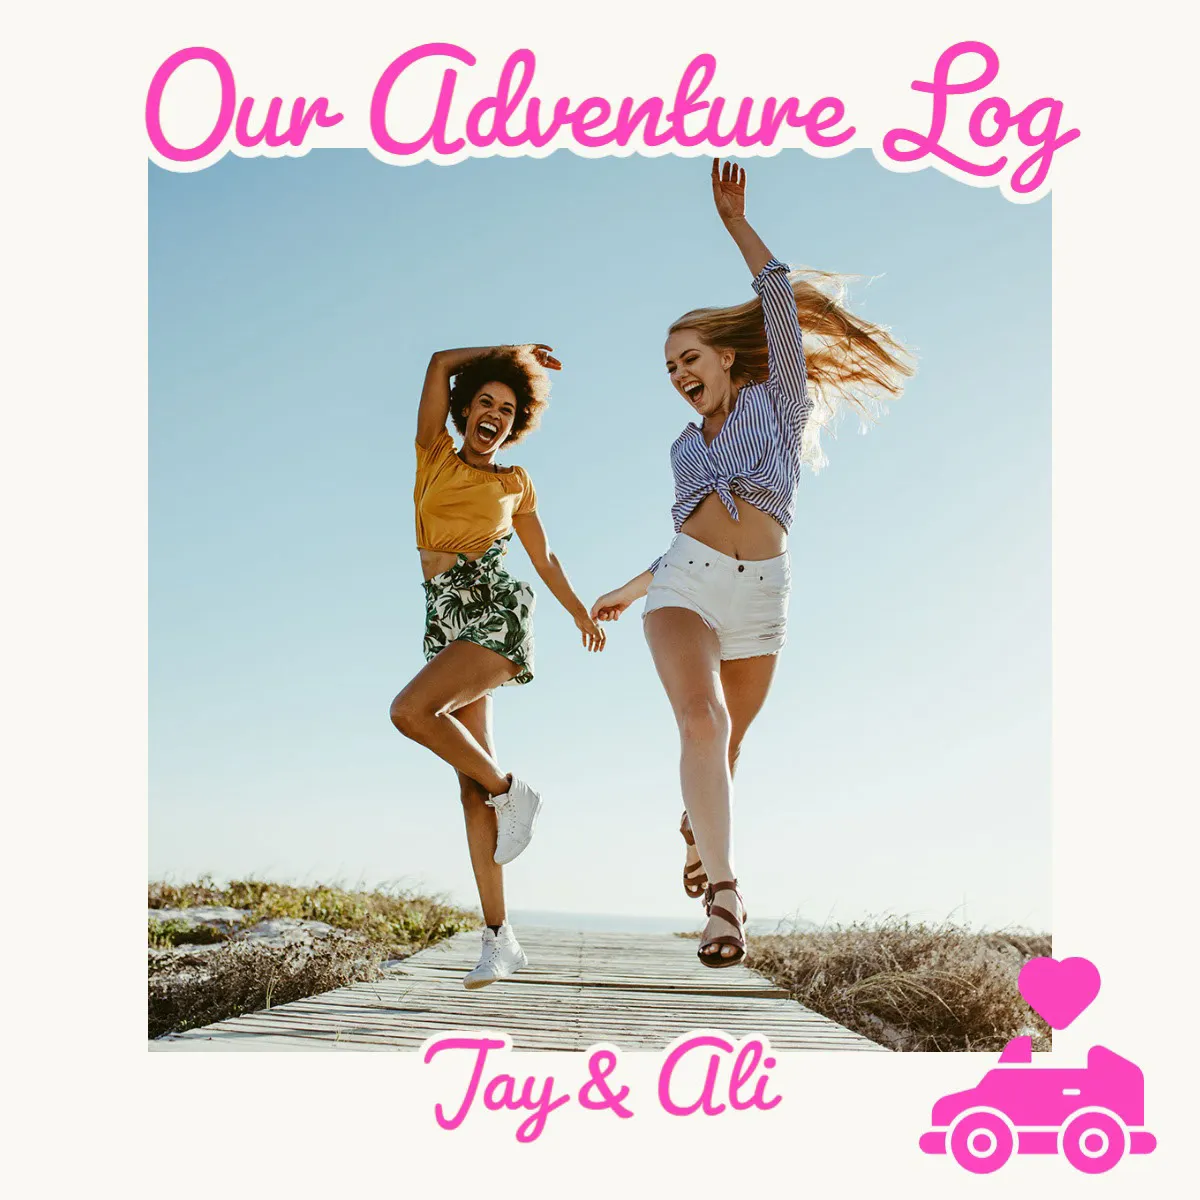 Pink & Beige Friends photo book adventure log Instagram post